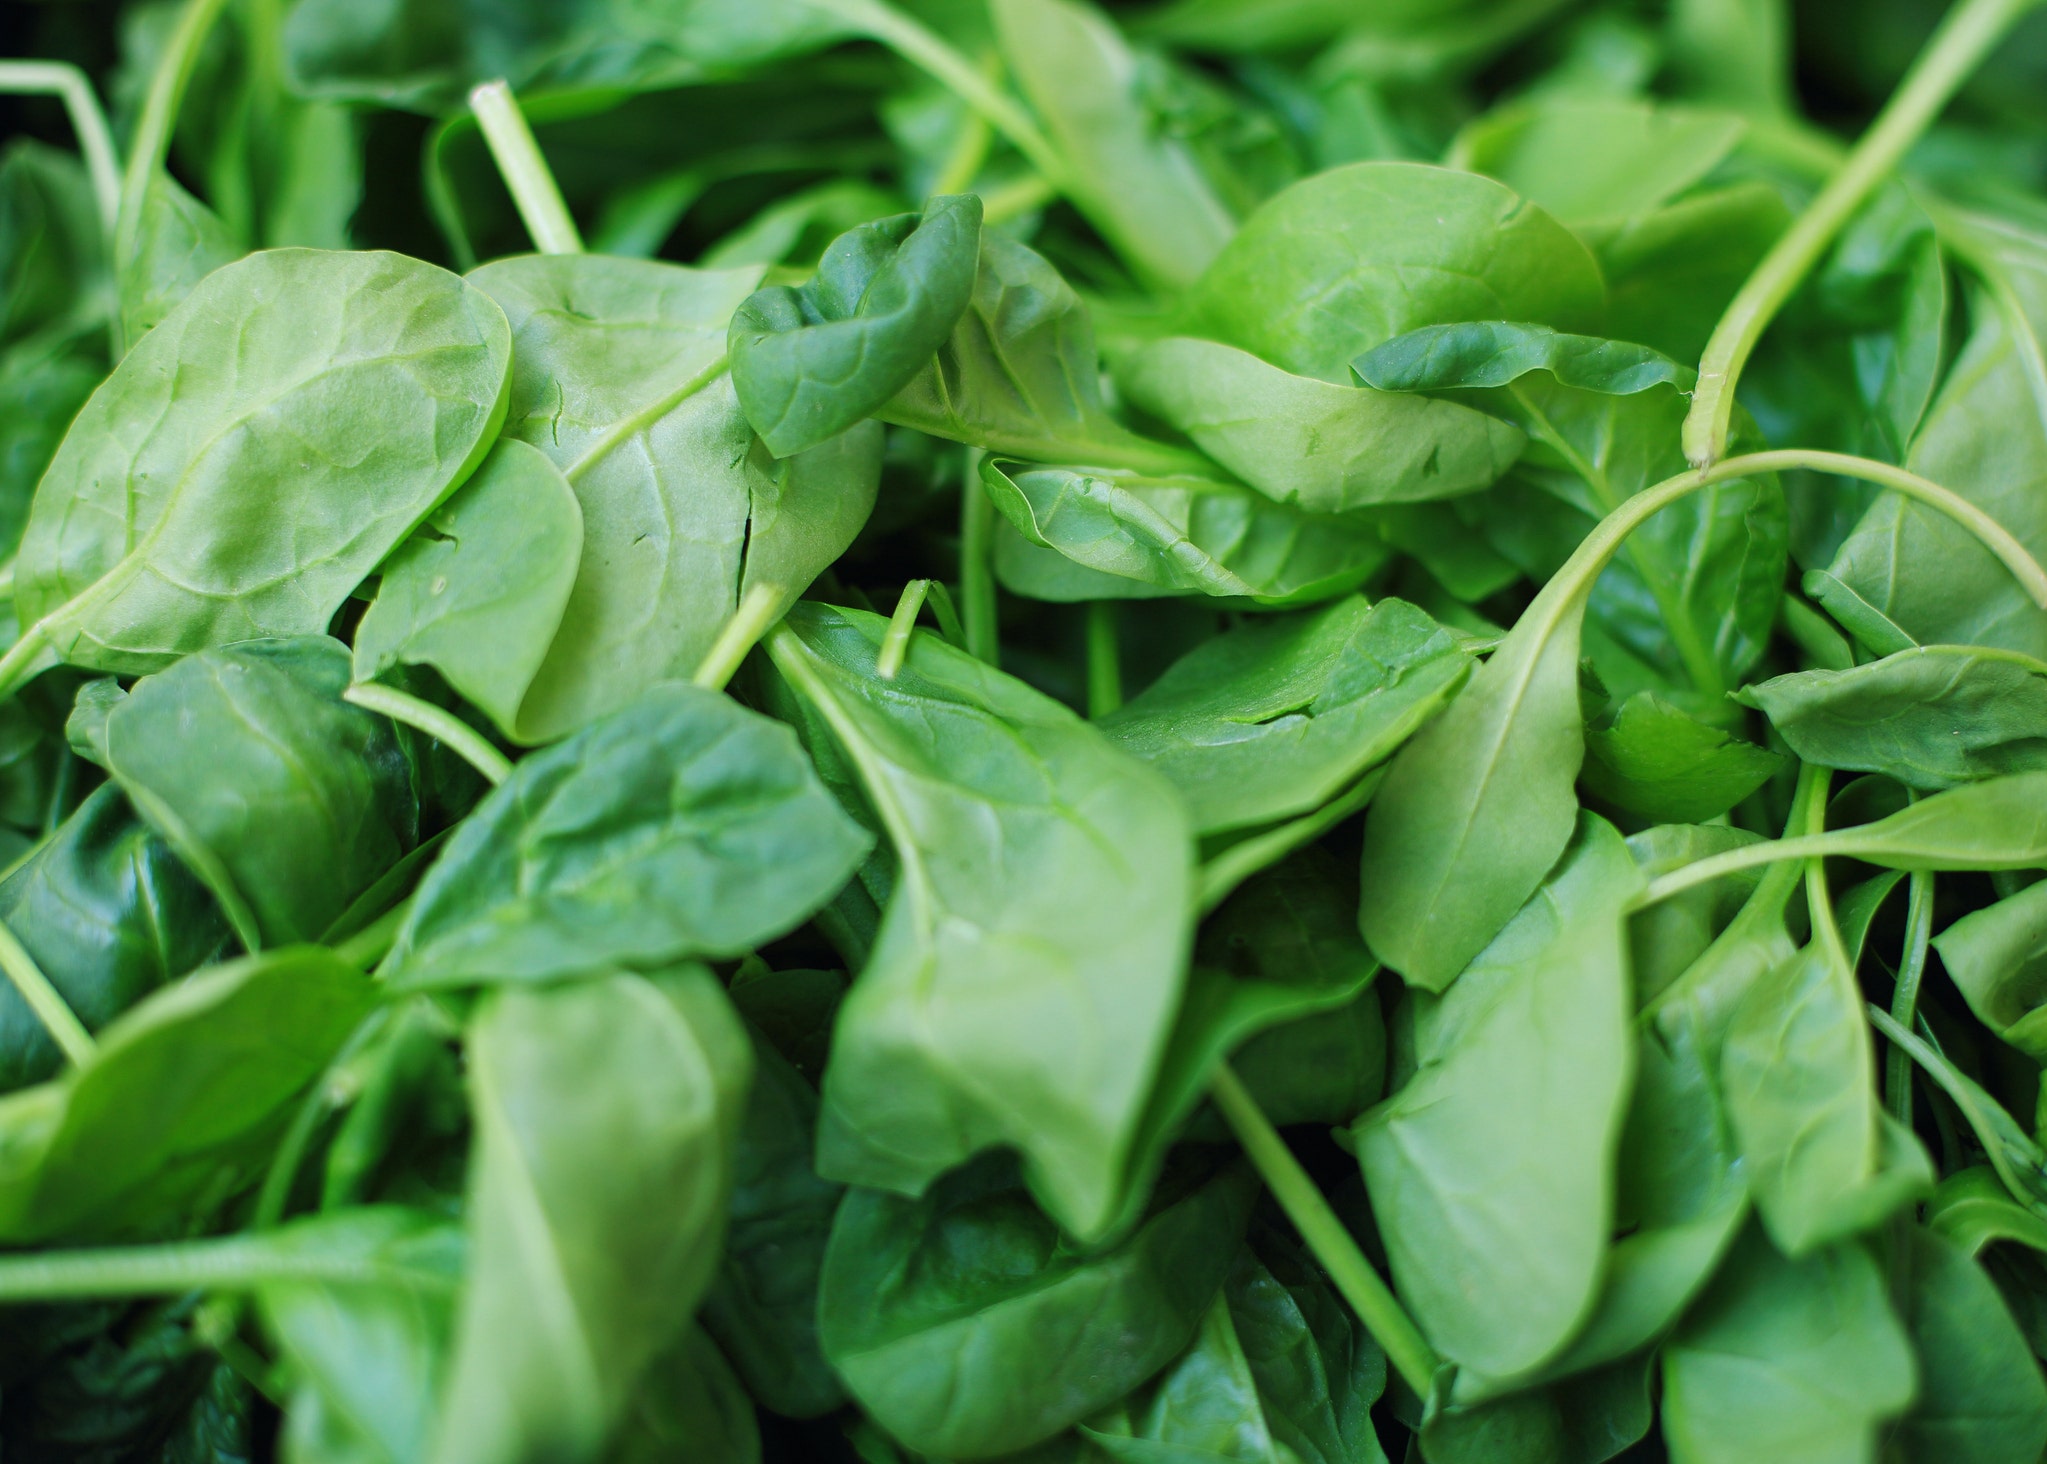 FOX NEWS: Baby spinach recalled over salmonella concerns December 1, 2020 at 03:17AM